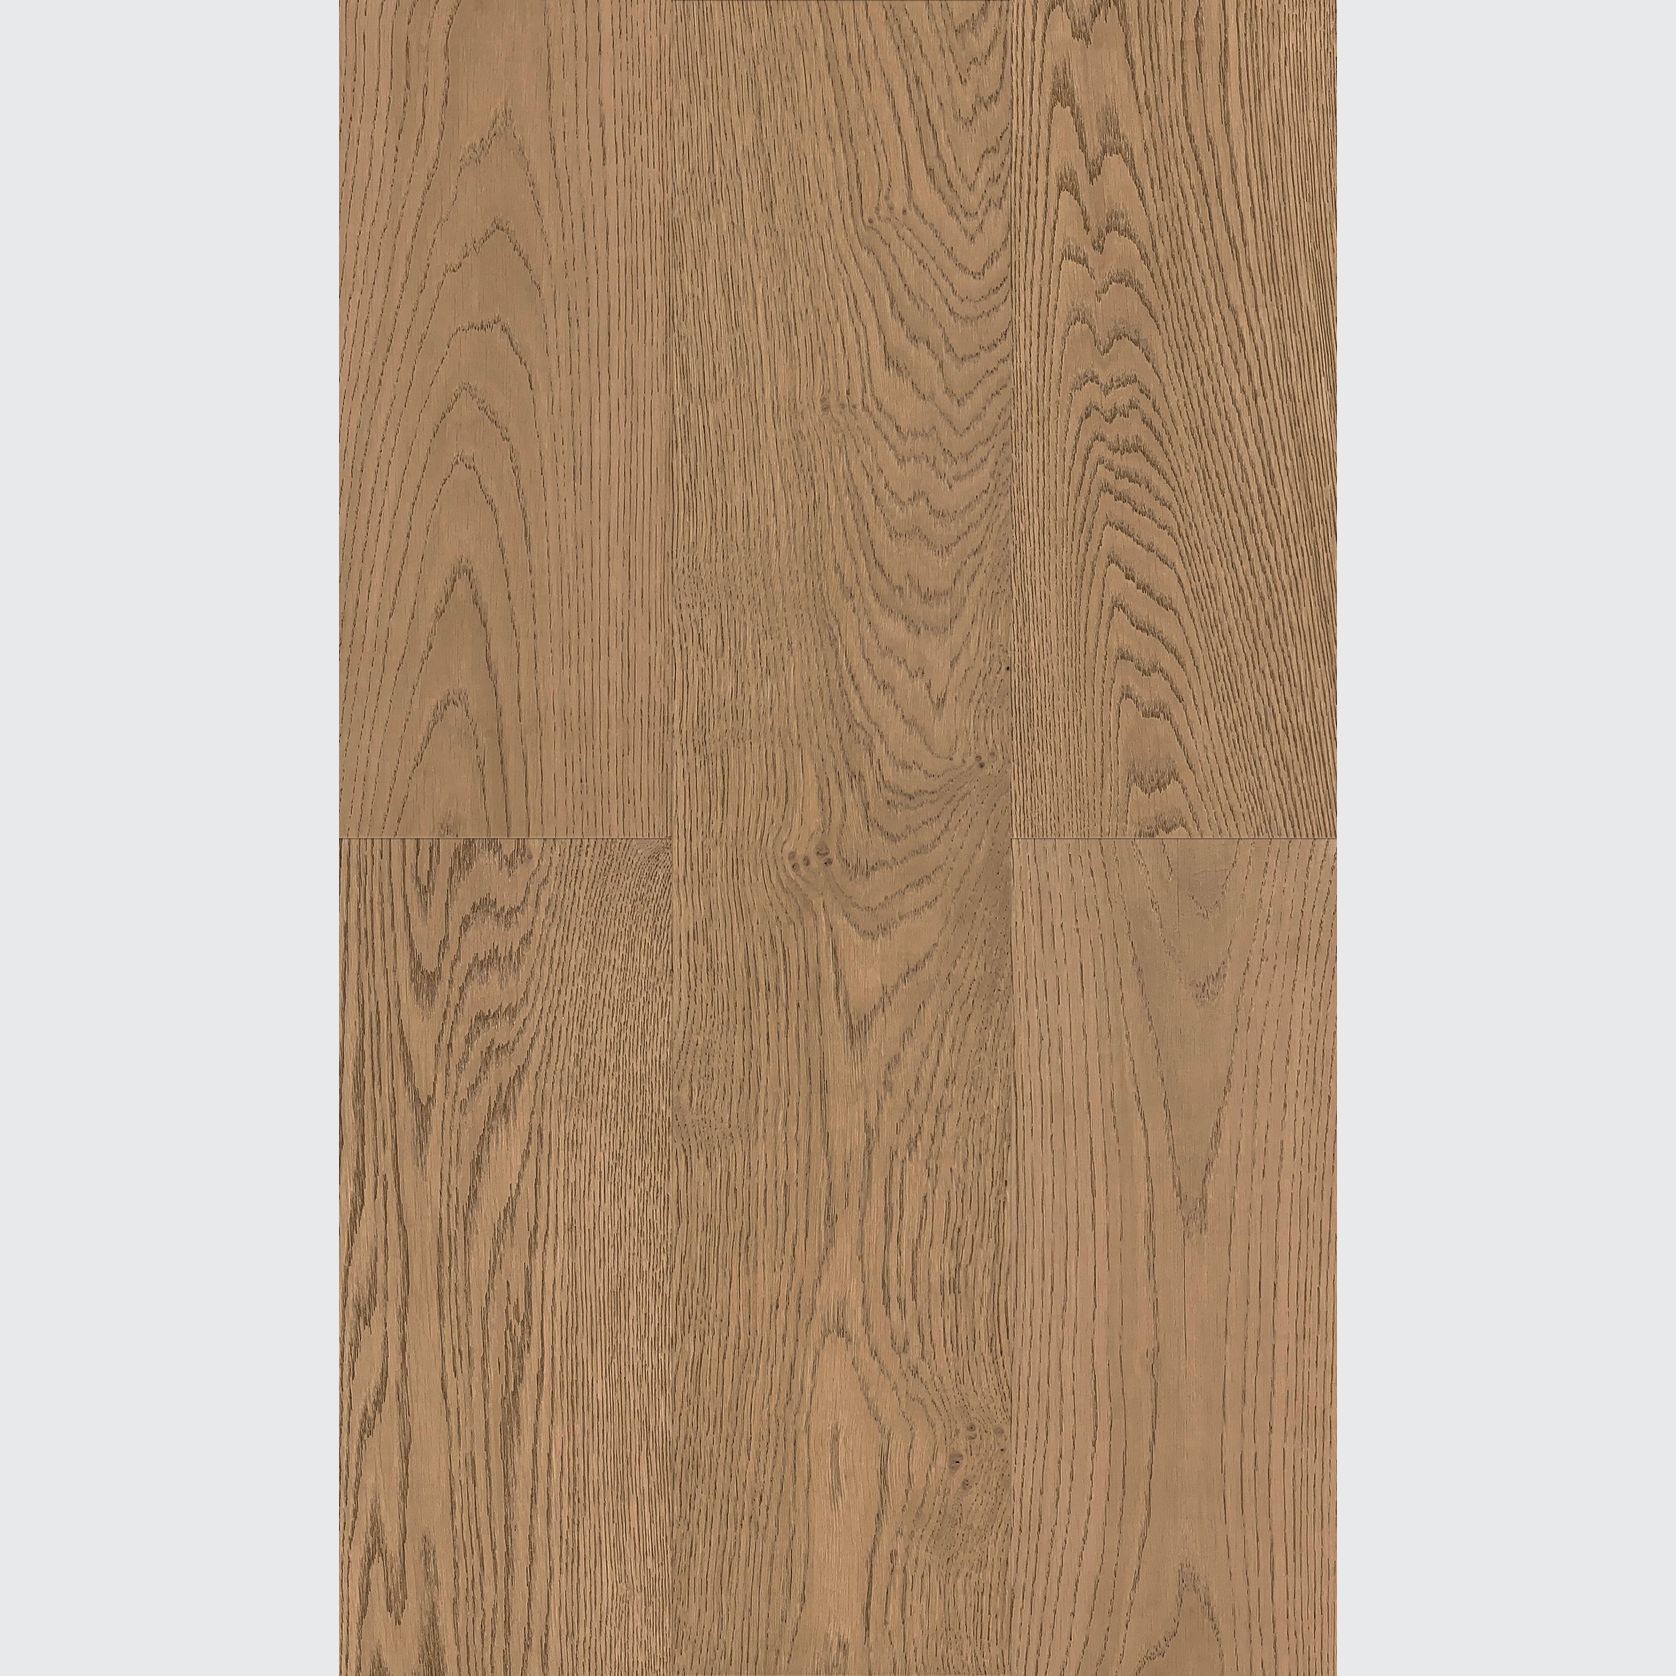 Smartfloor Tawny Oak Feature Timber Flooring gallery detail image